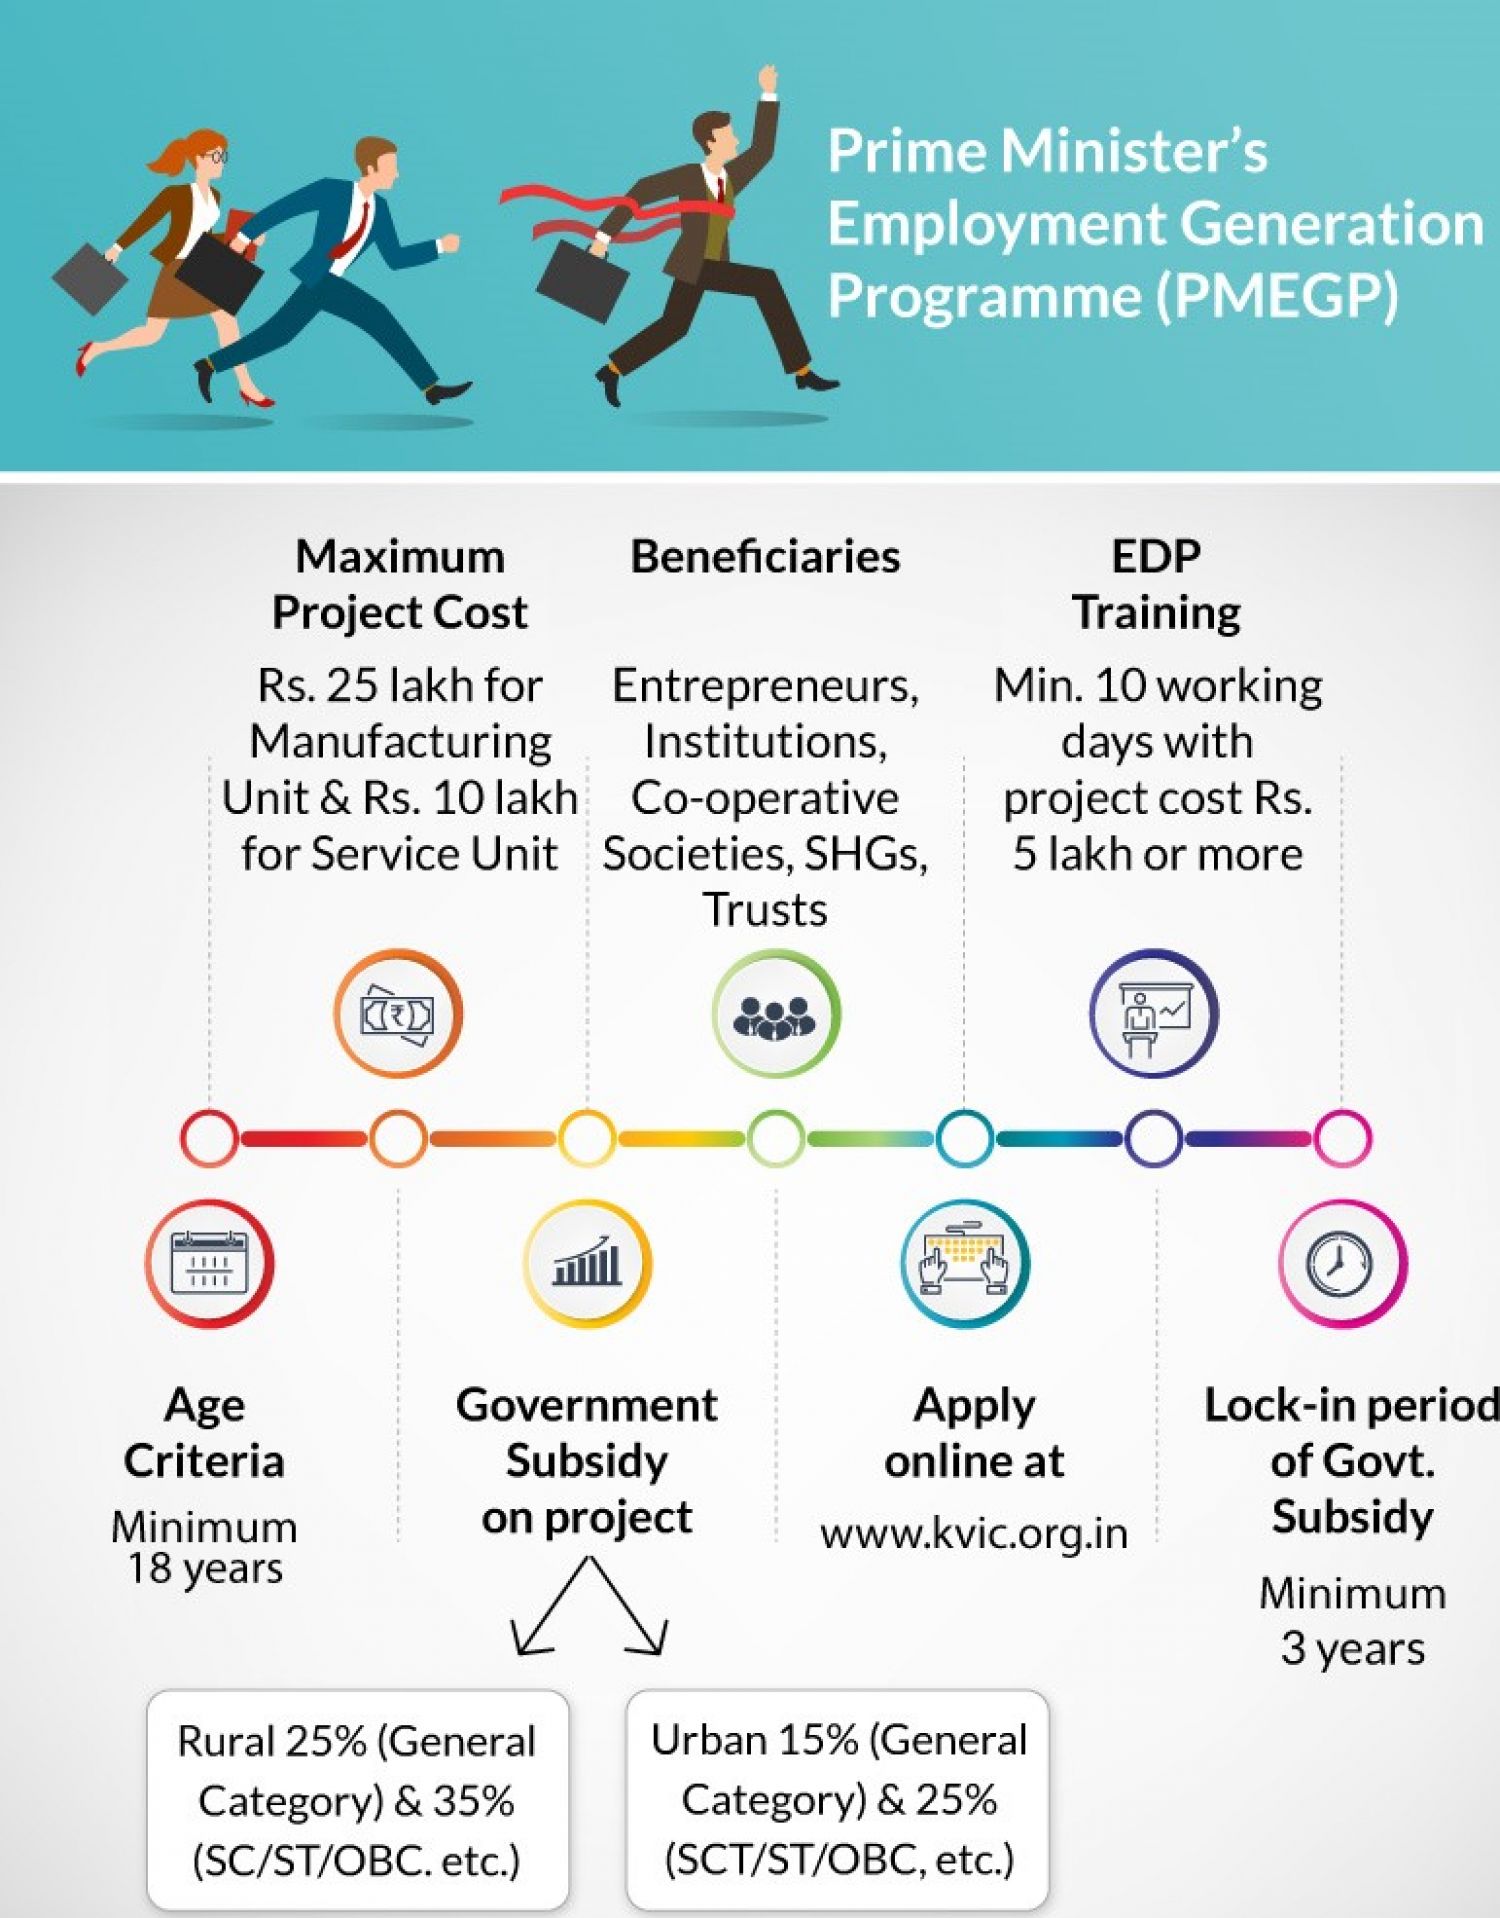 Prime Minister Employment Generation Programme (PMEGP)